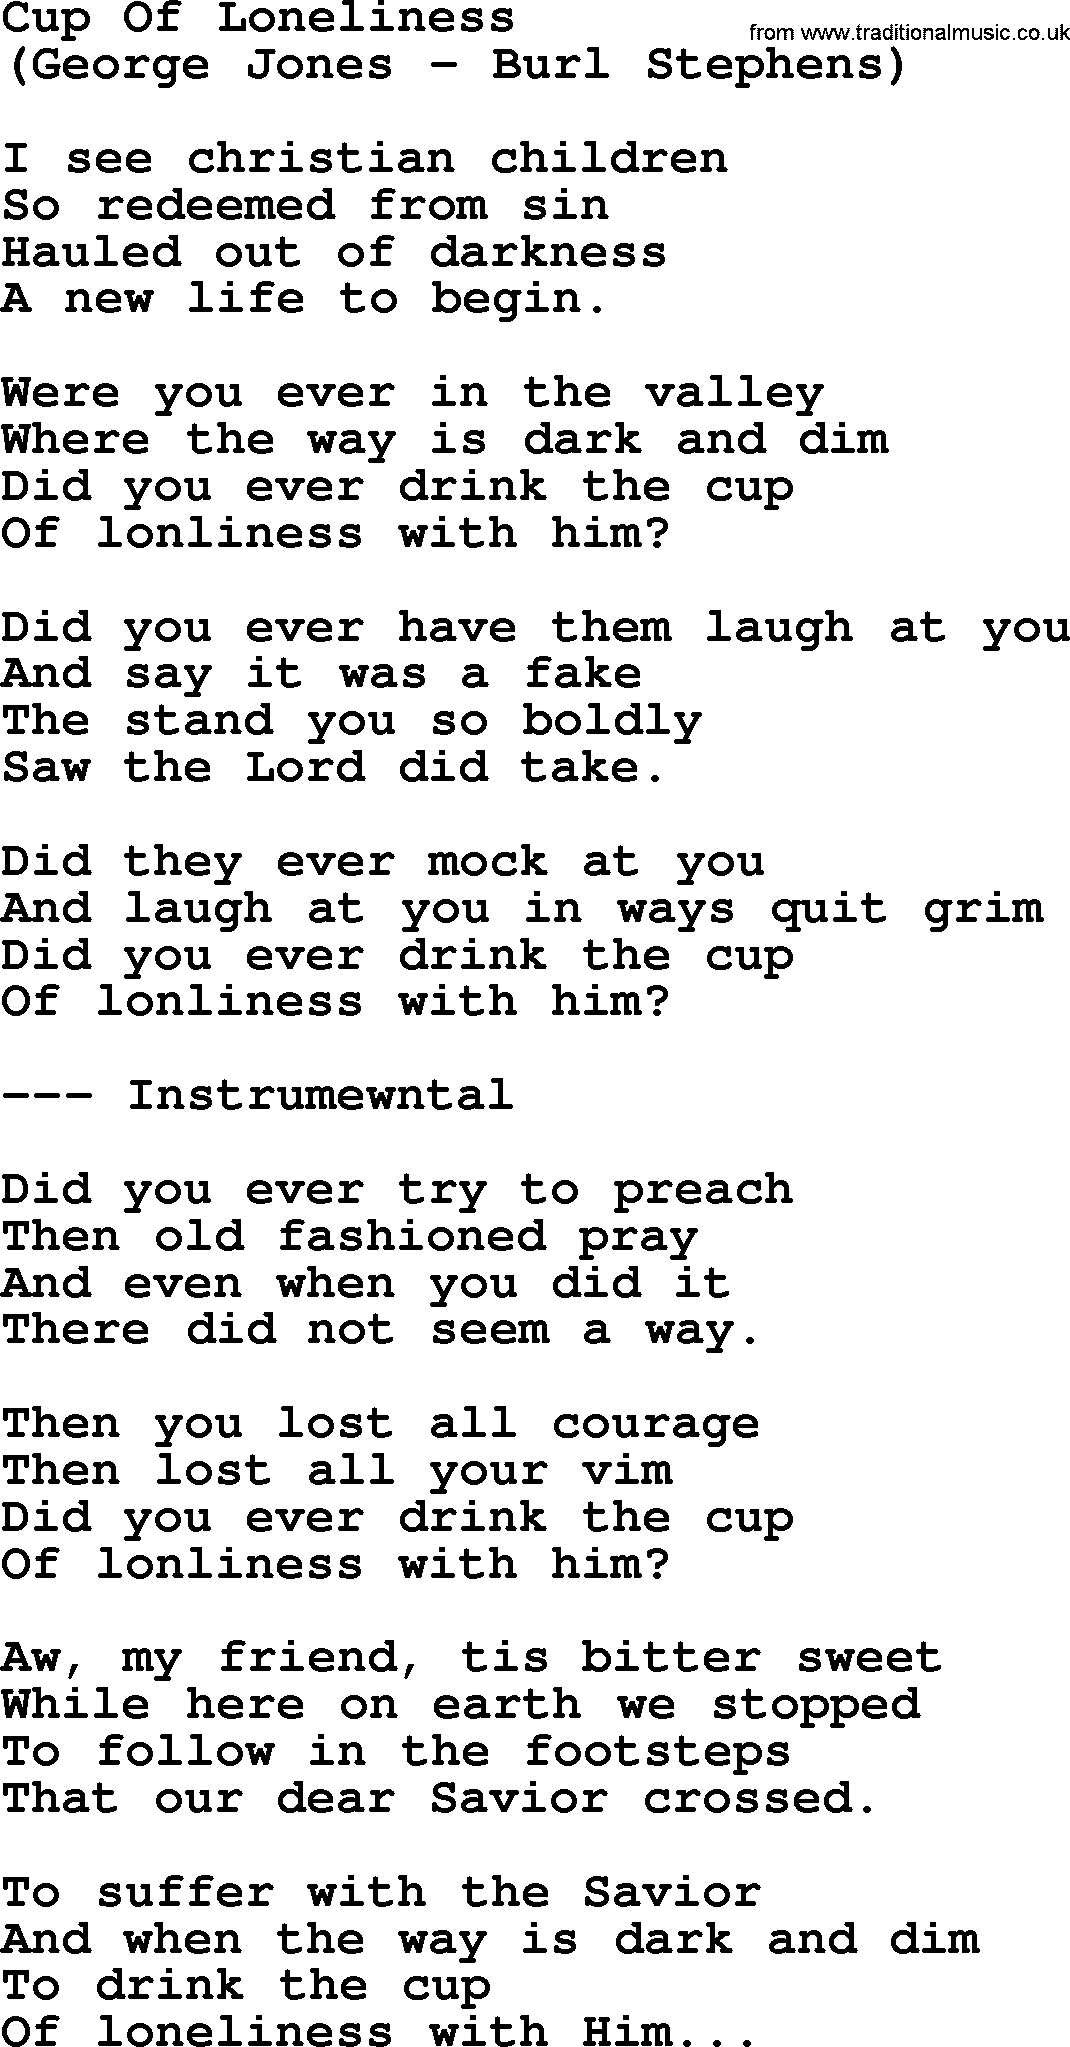 George Jones song: Cup Of Loneliness, lyrics